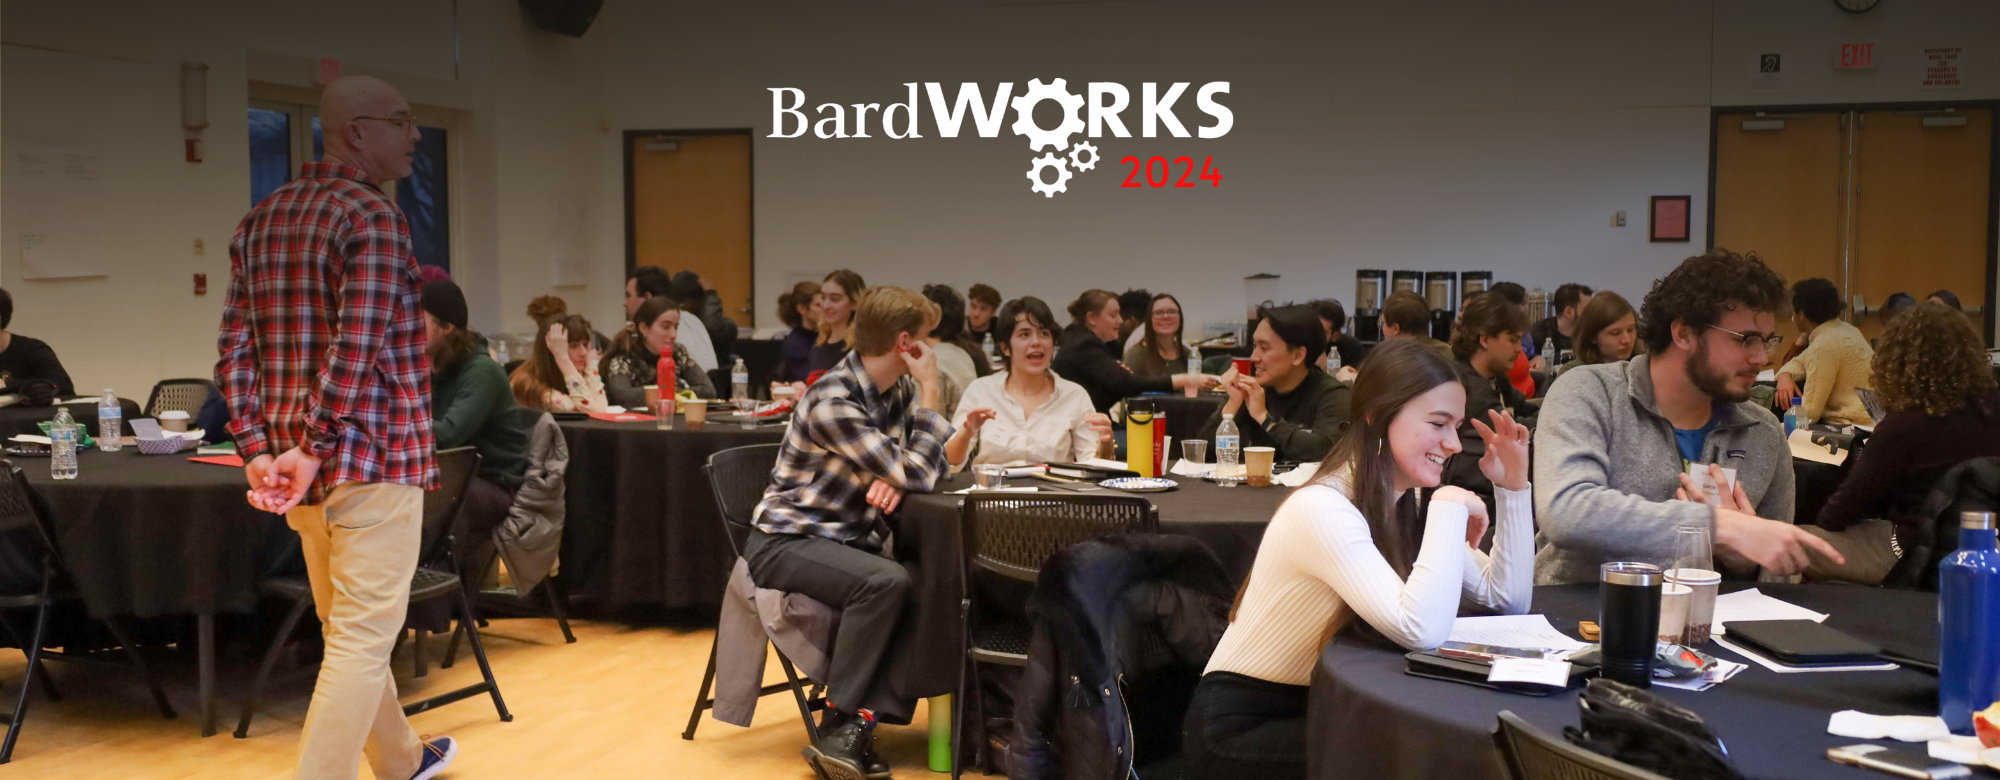 Main Image for BardWorks Program of Events